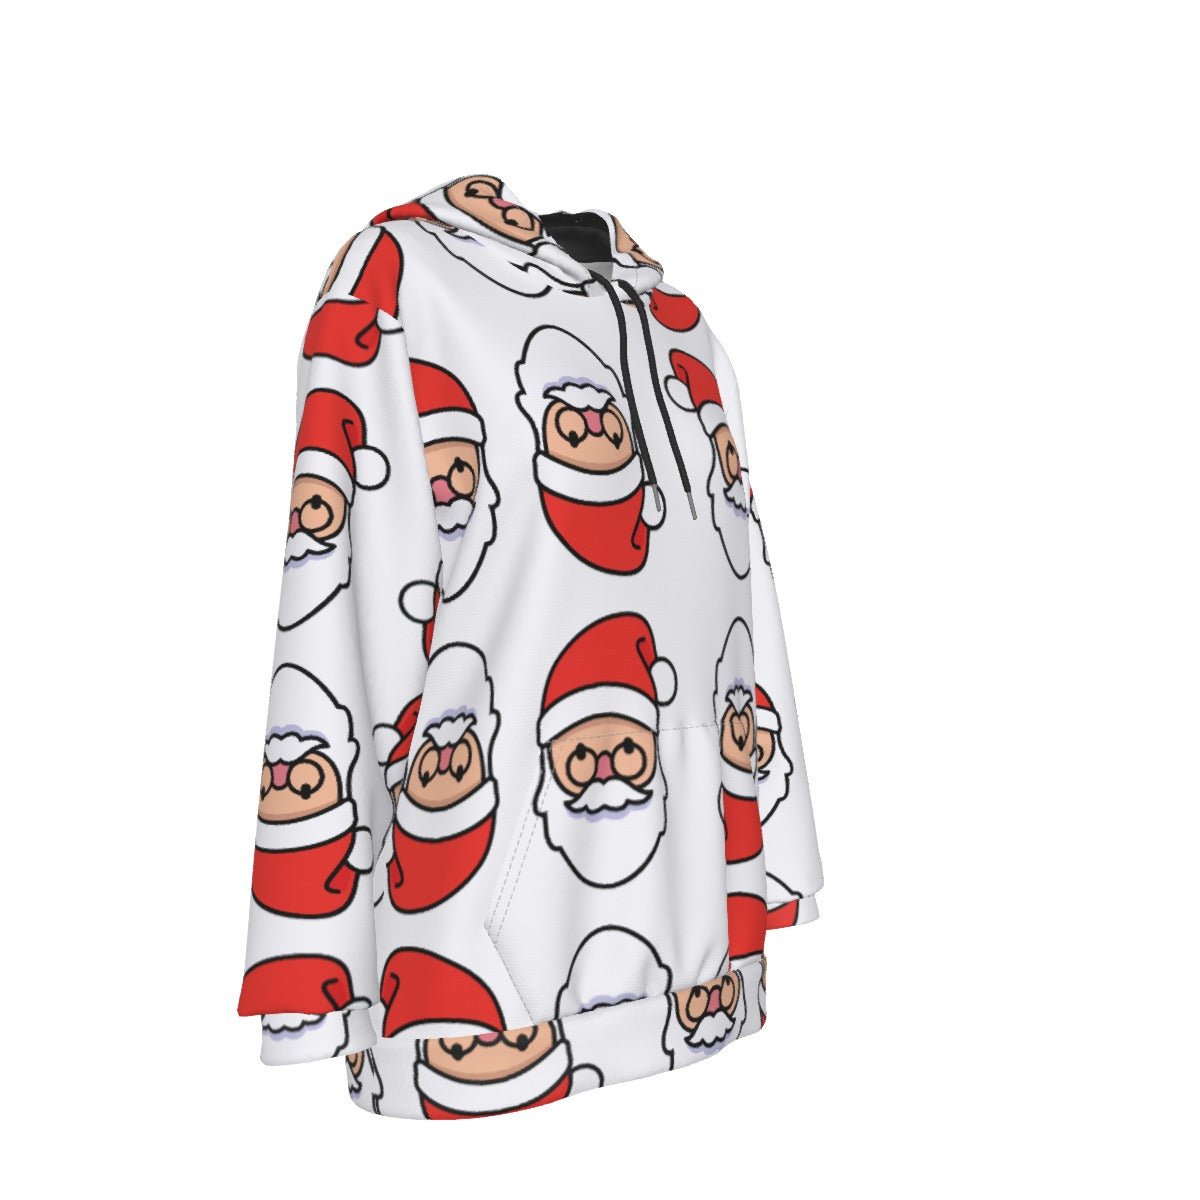 Women's Fleece Christmas Hoodie - Mirrored Santa - Festive Style